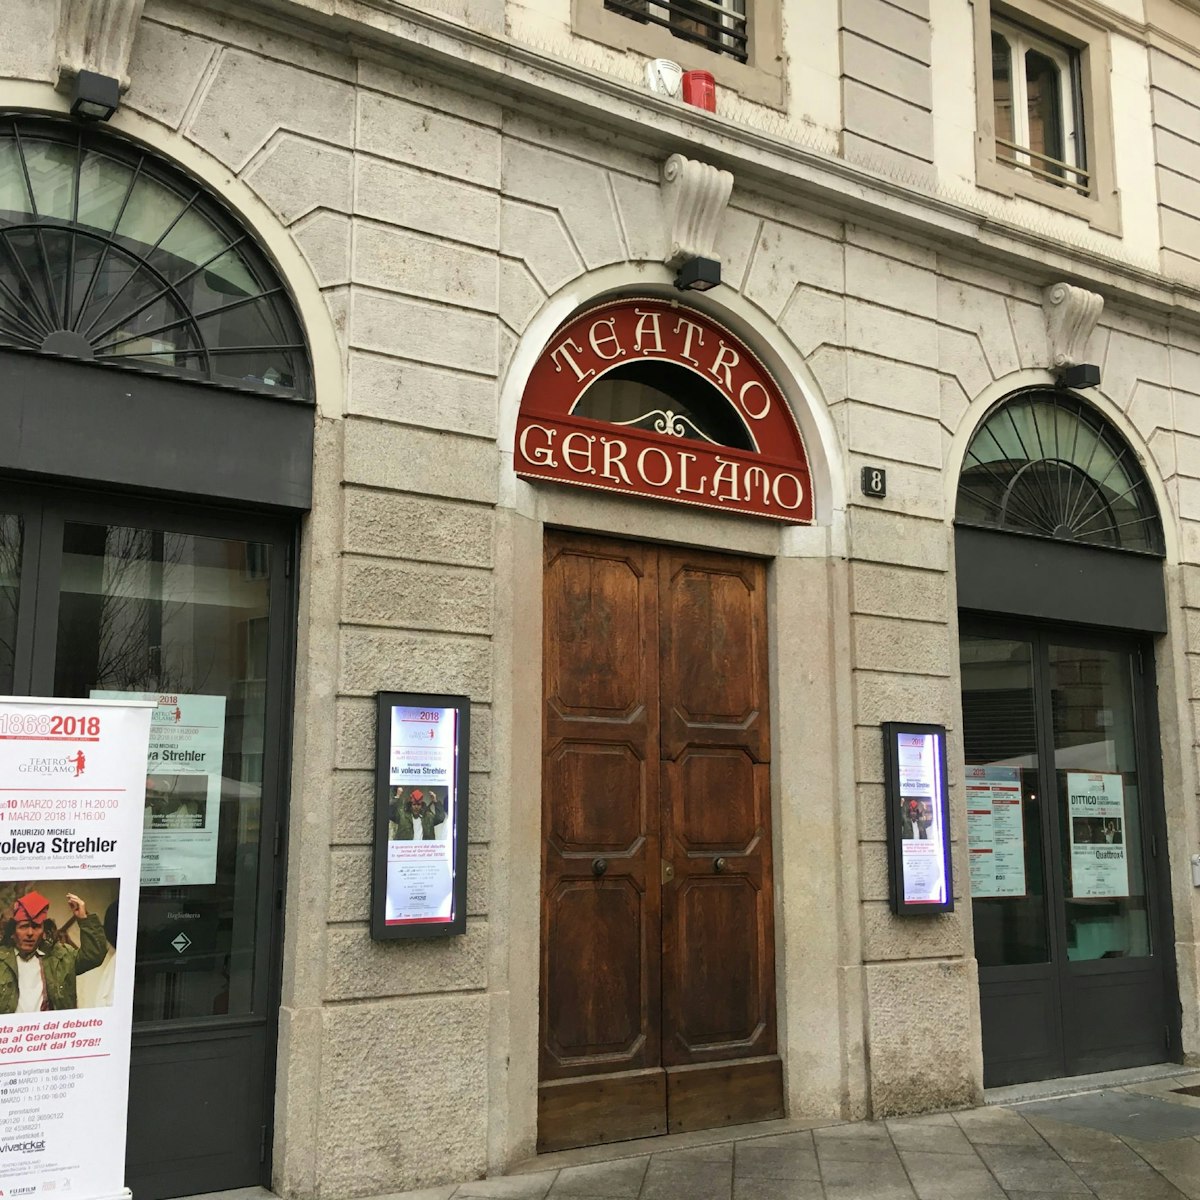 Street view of Teatro Gerolamo